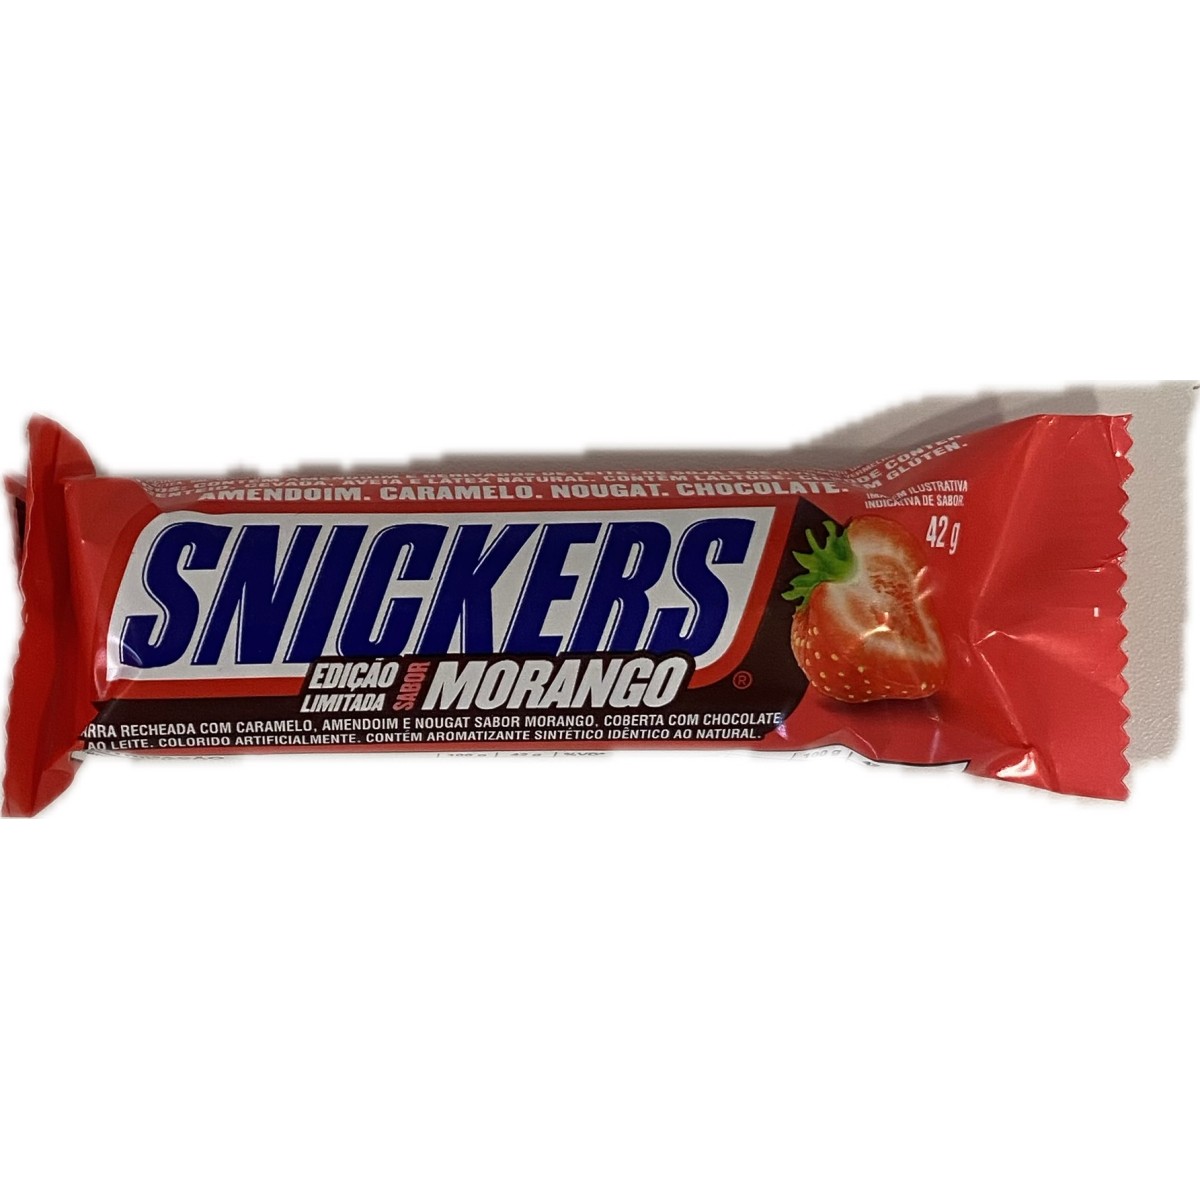 Snickers aardbei